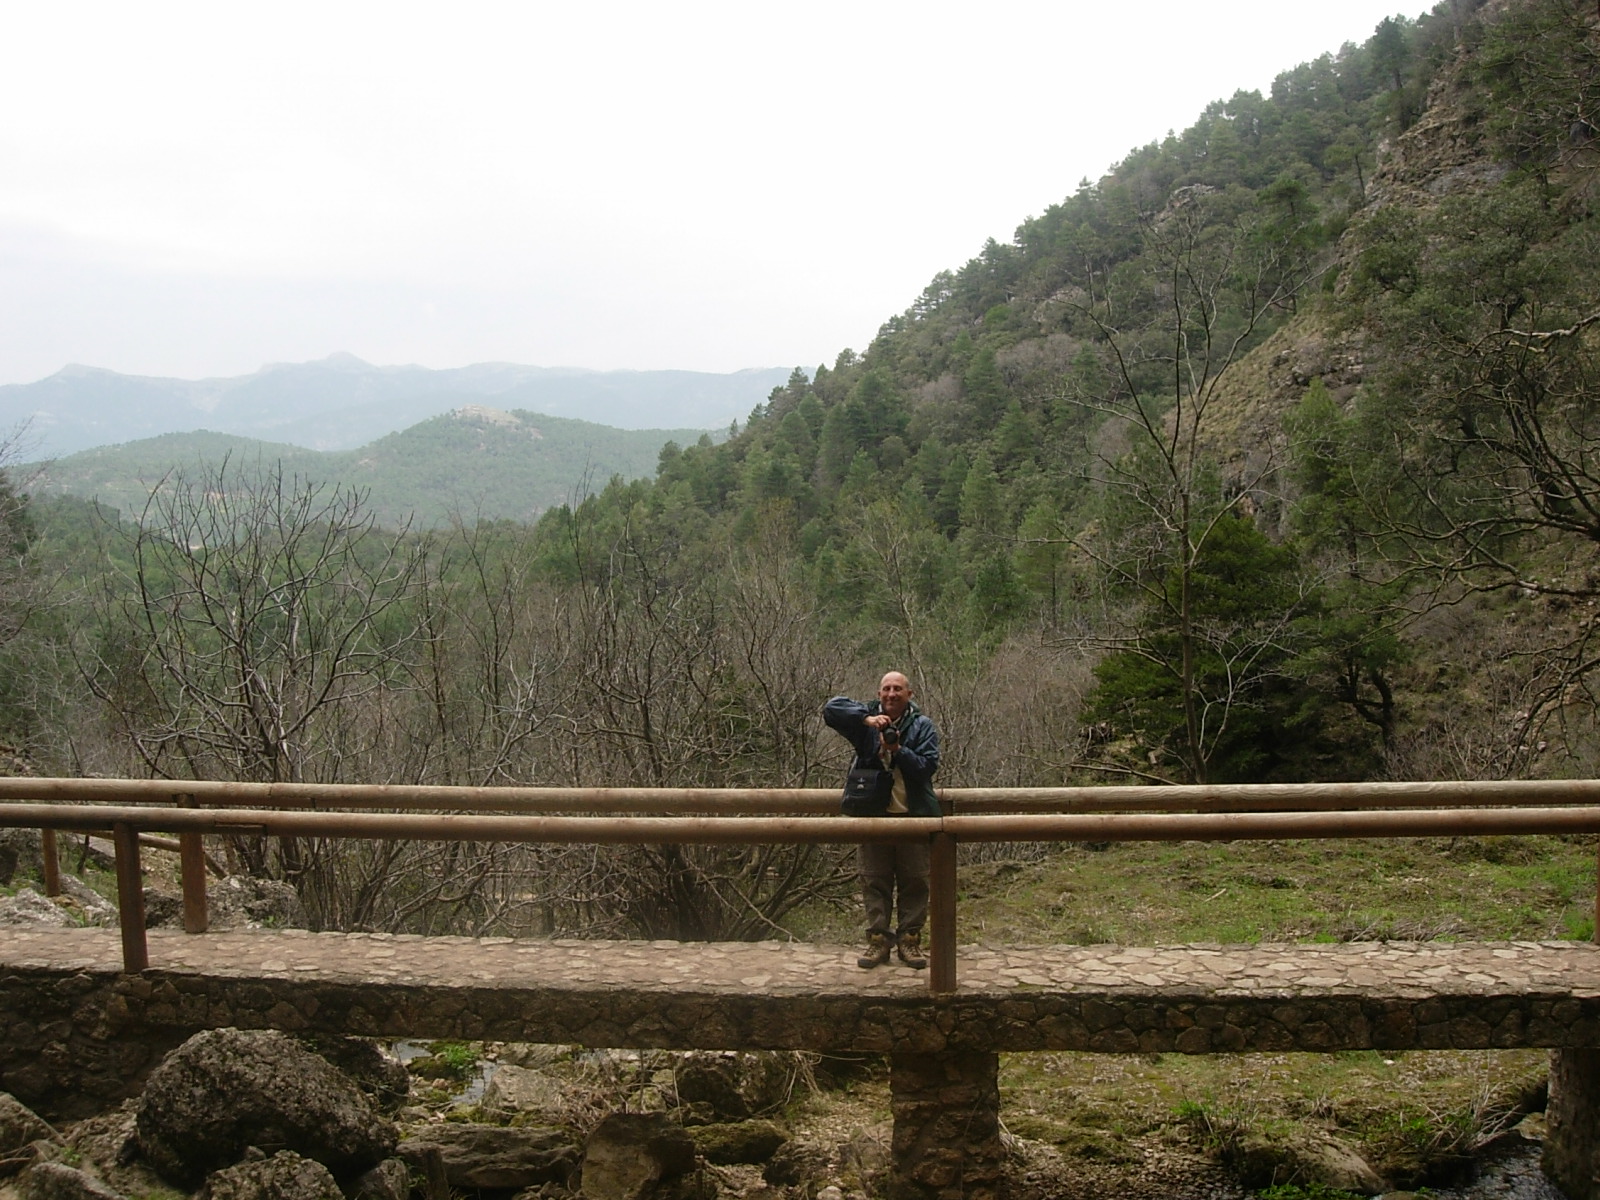 a man taking a po on a bridge overlooking a mountain